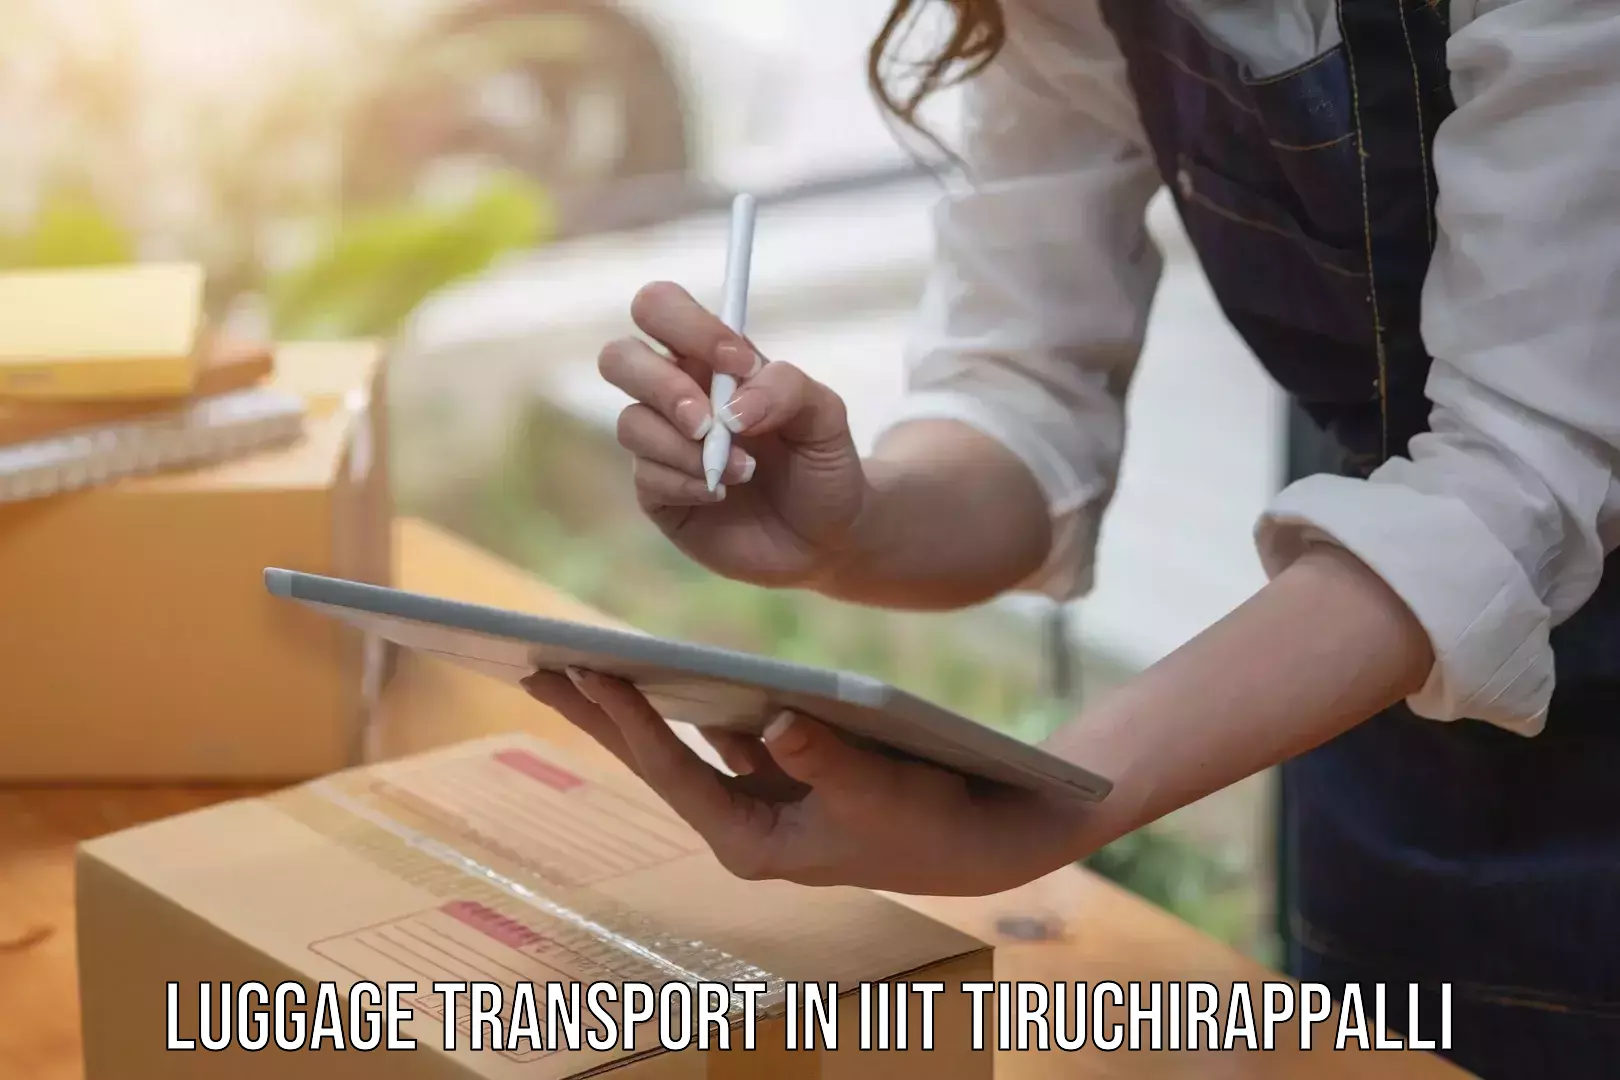 Luggage transport service in IIIT Tiruchirappalli